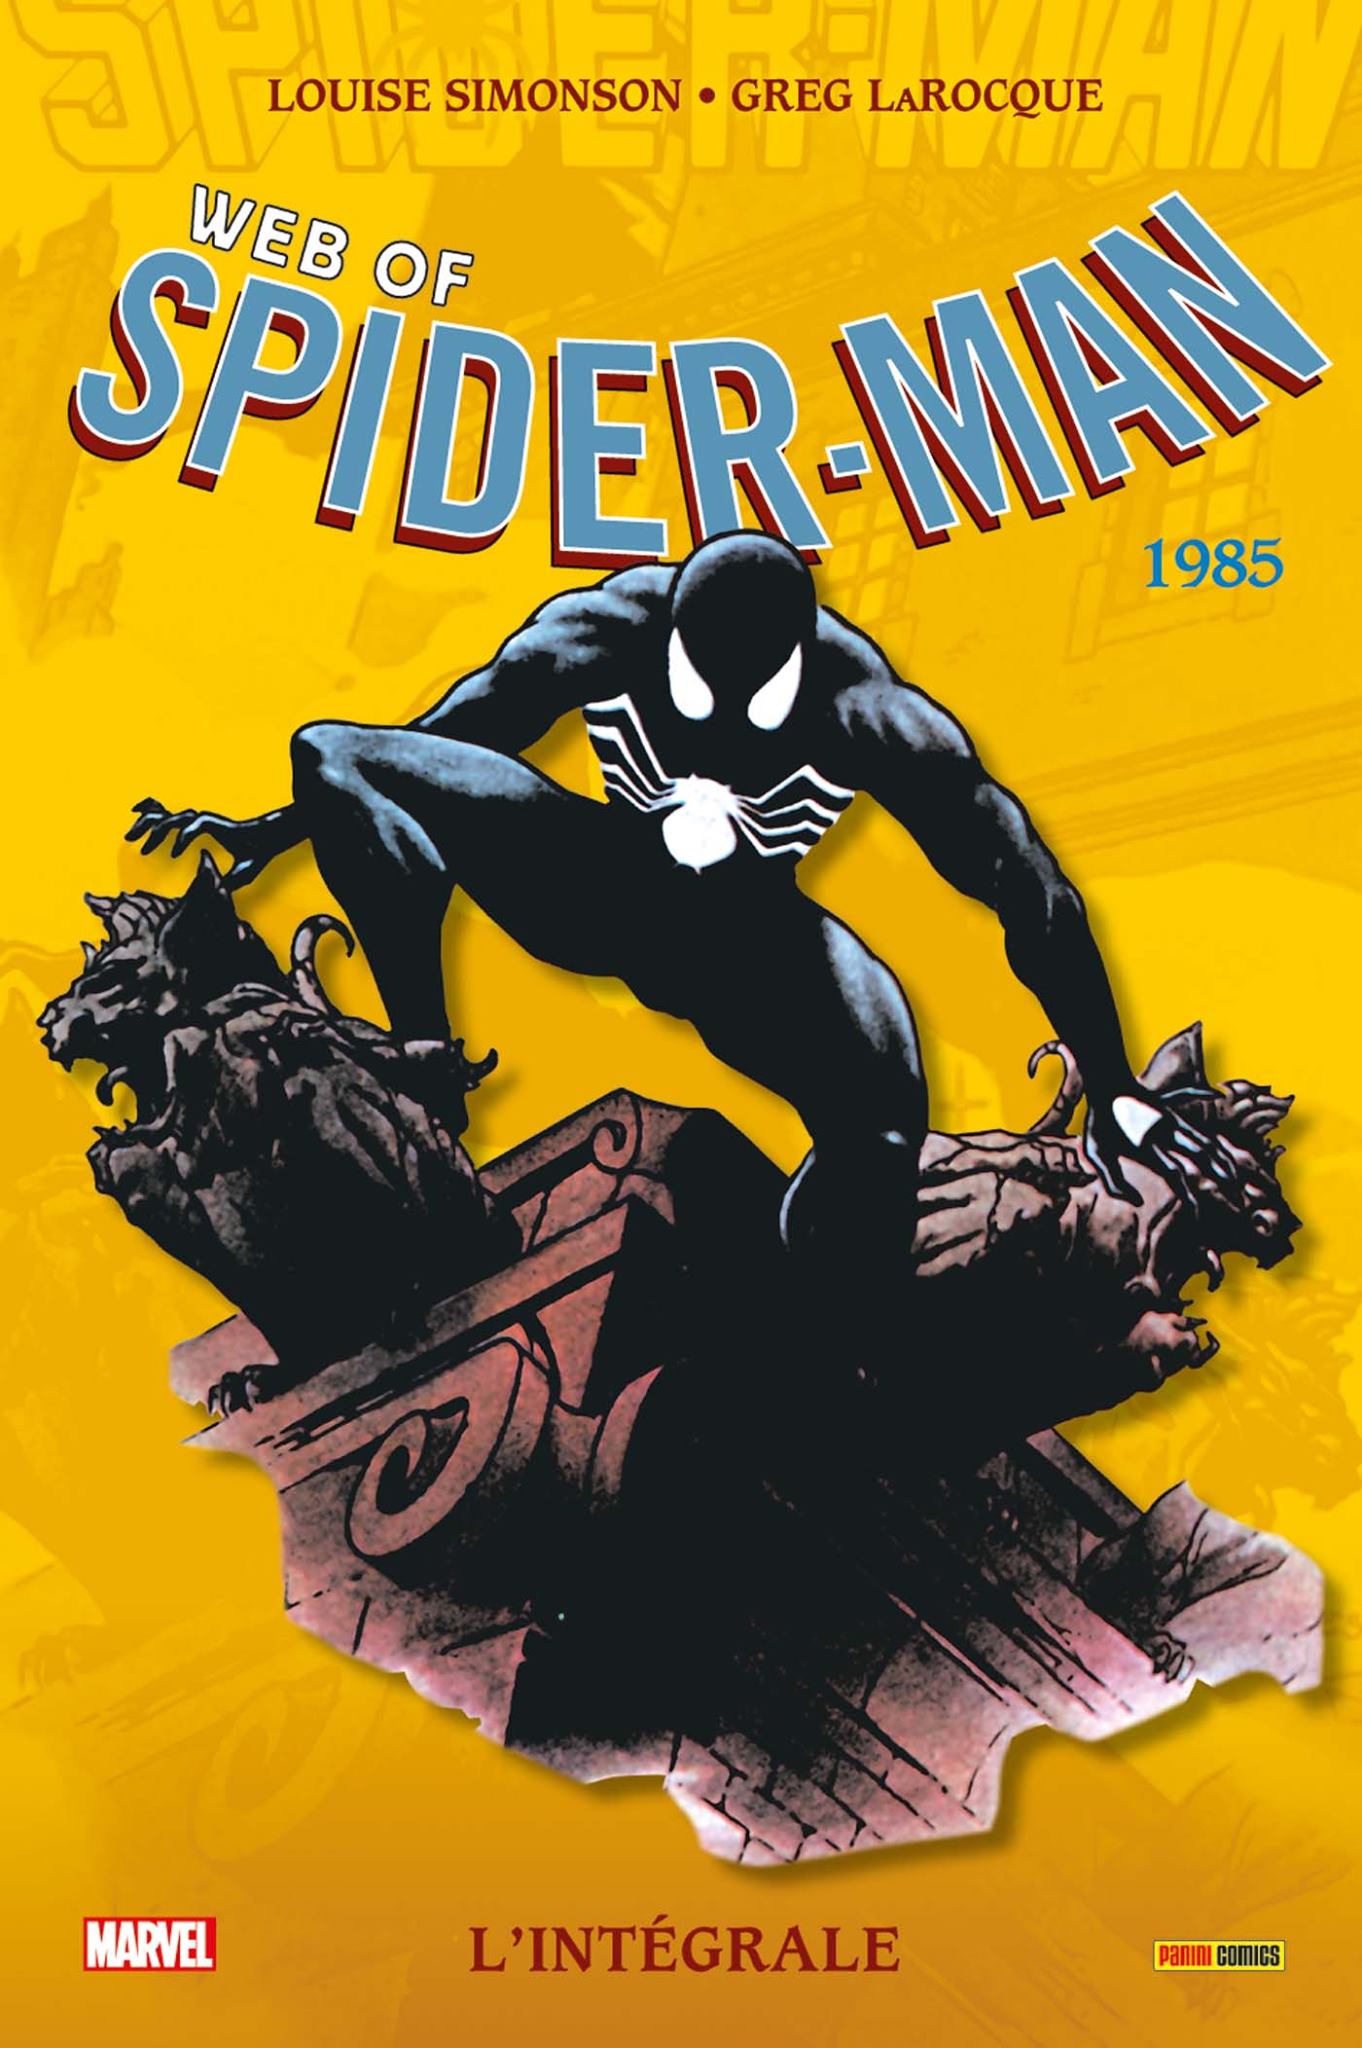 img comics 15972 web of spider man l integrale 1985